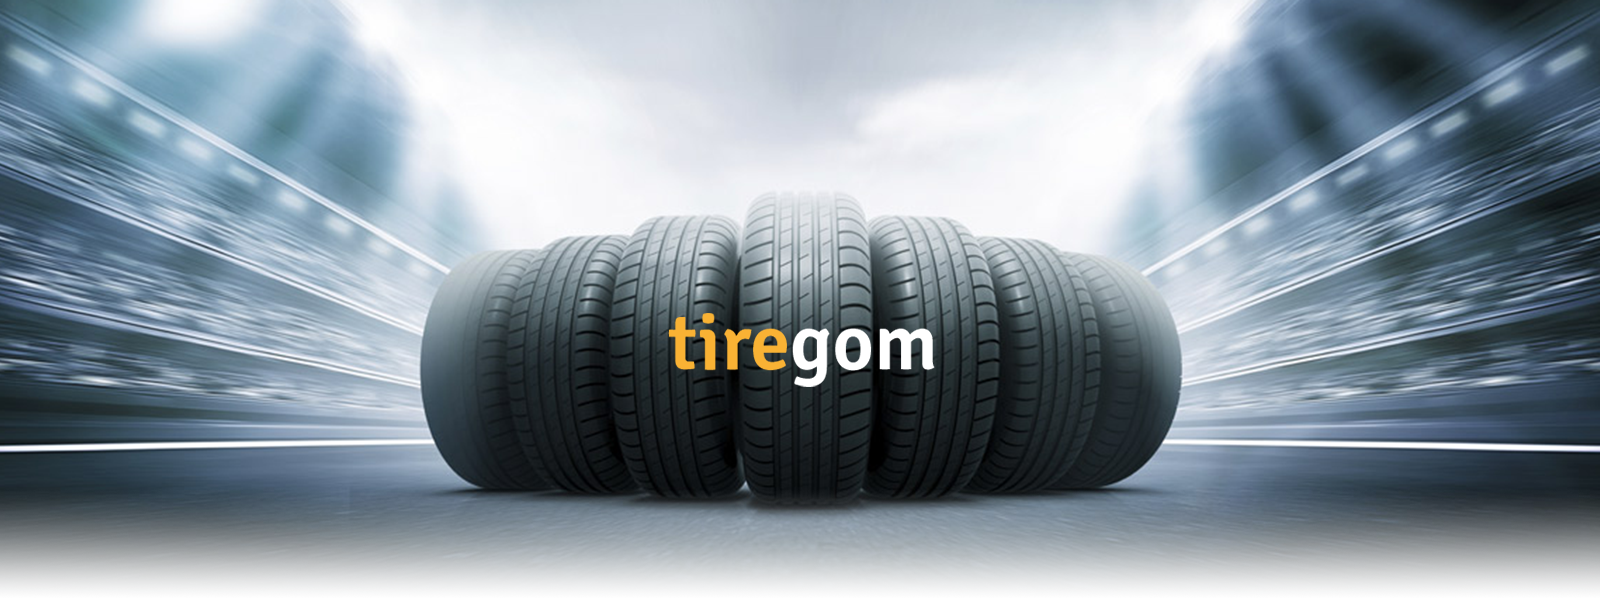 Tiregom.gr : πρόγραμμα σύγκρισης ελαστικών